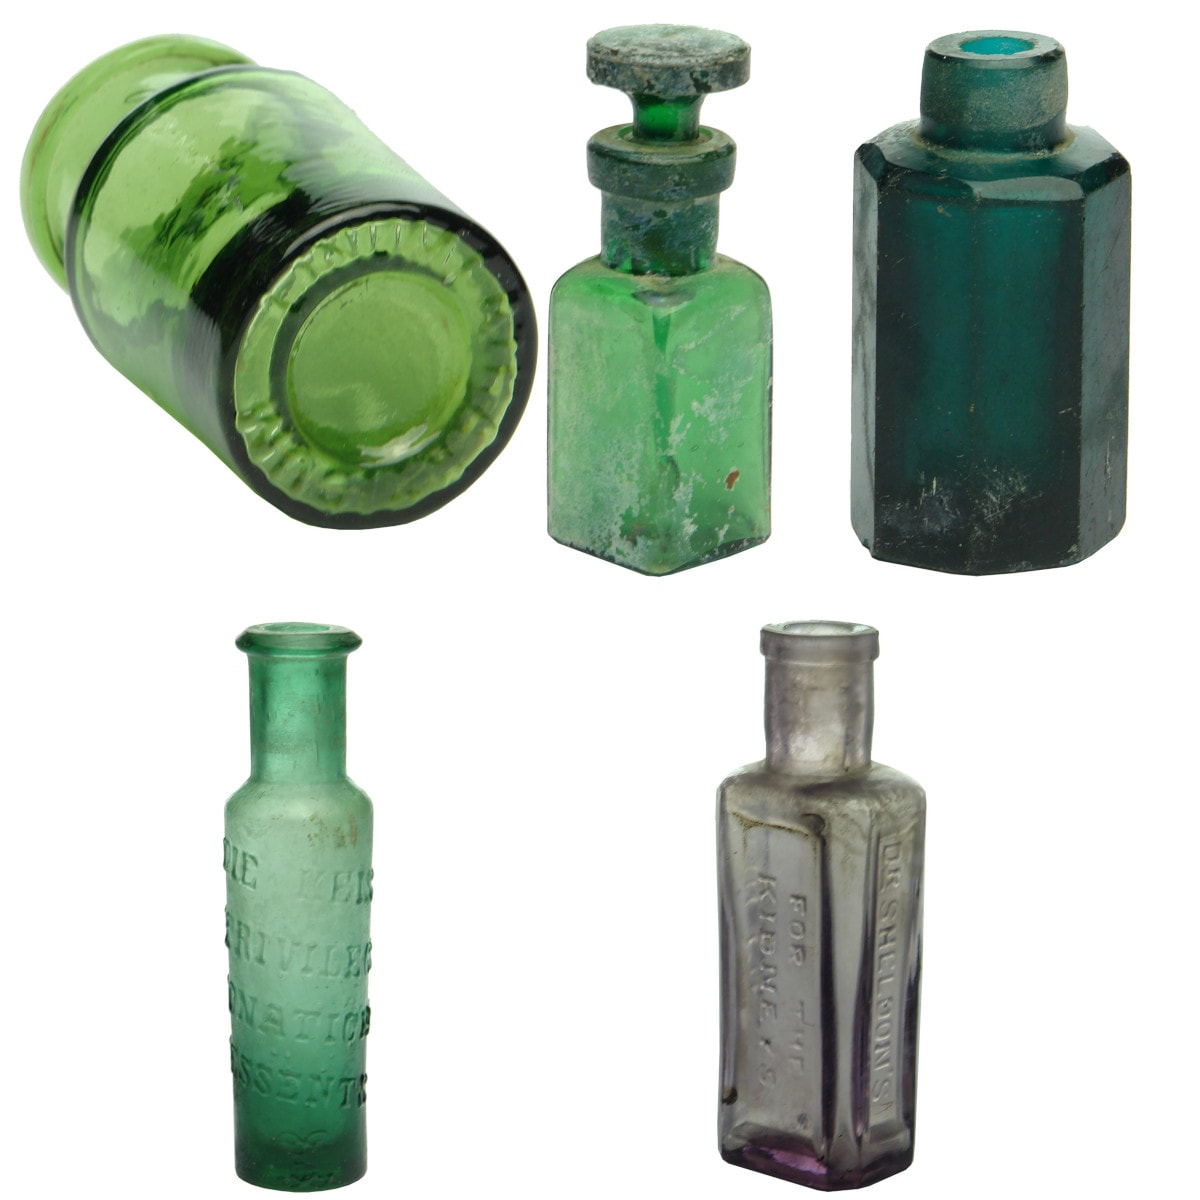 5 Bottles: Linum Catharticum; Ether Dropper; Eight sided scent bottle; Altona Drops; Dr Sheldon's Gin Pills.